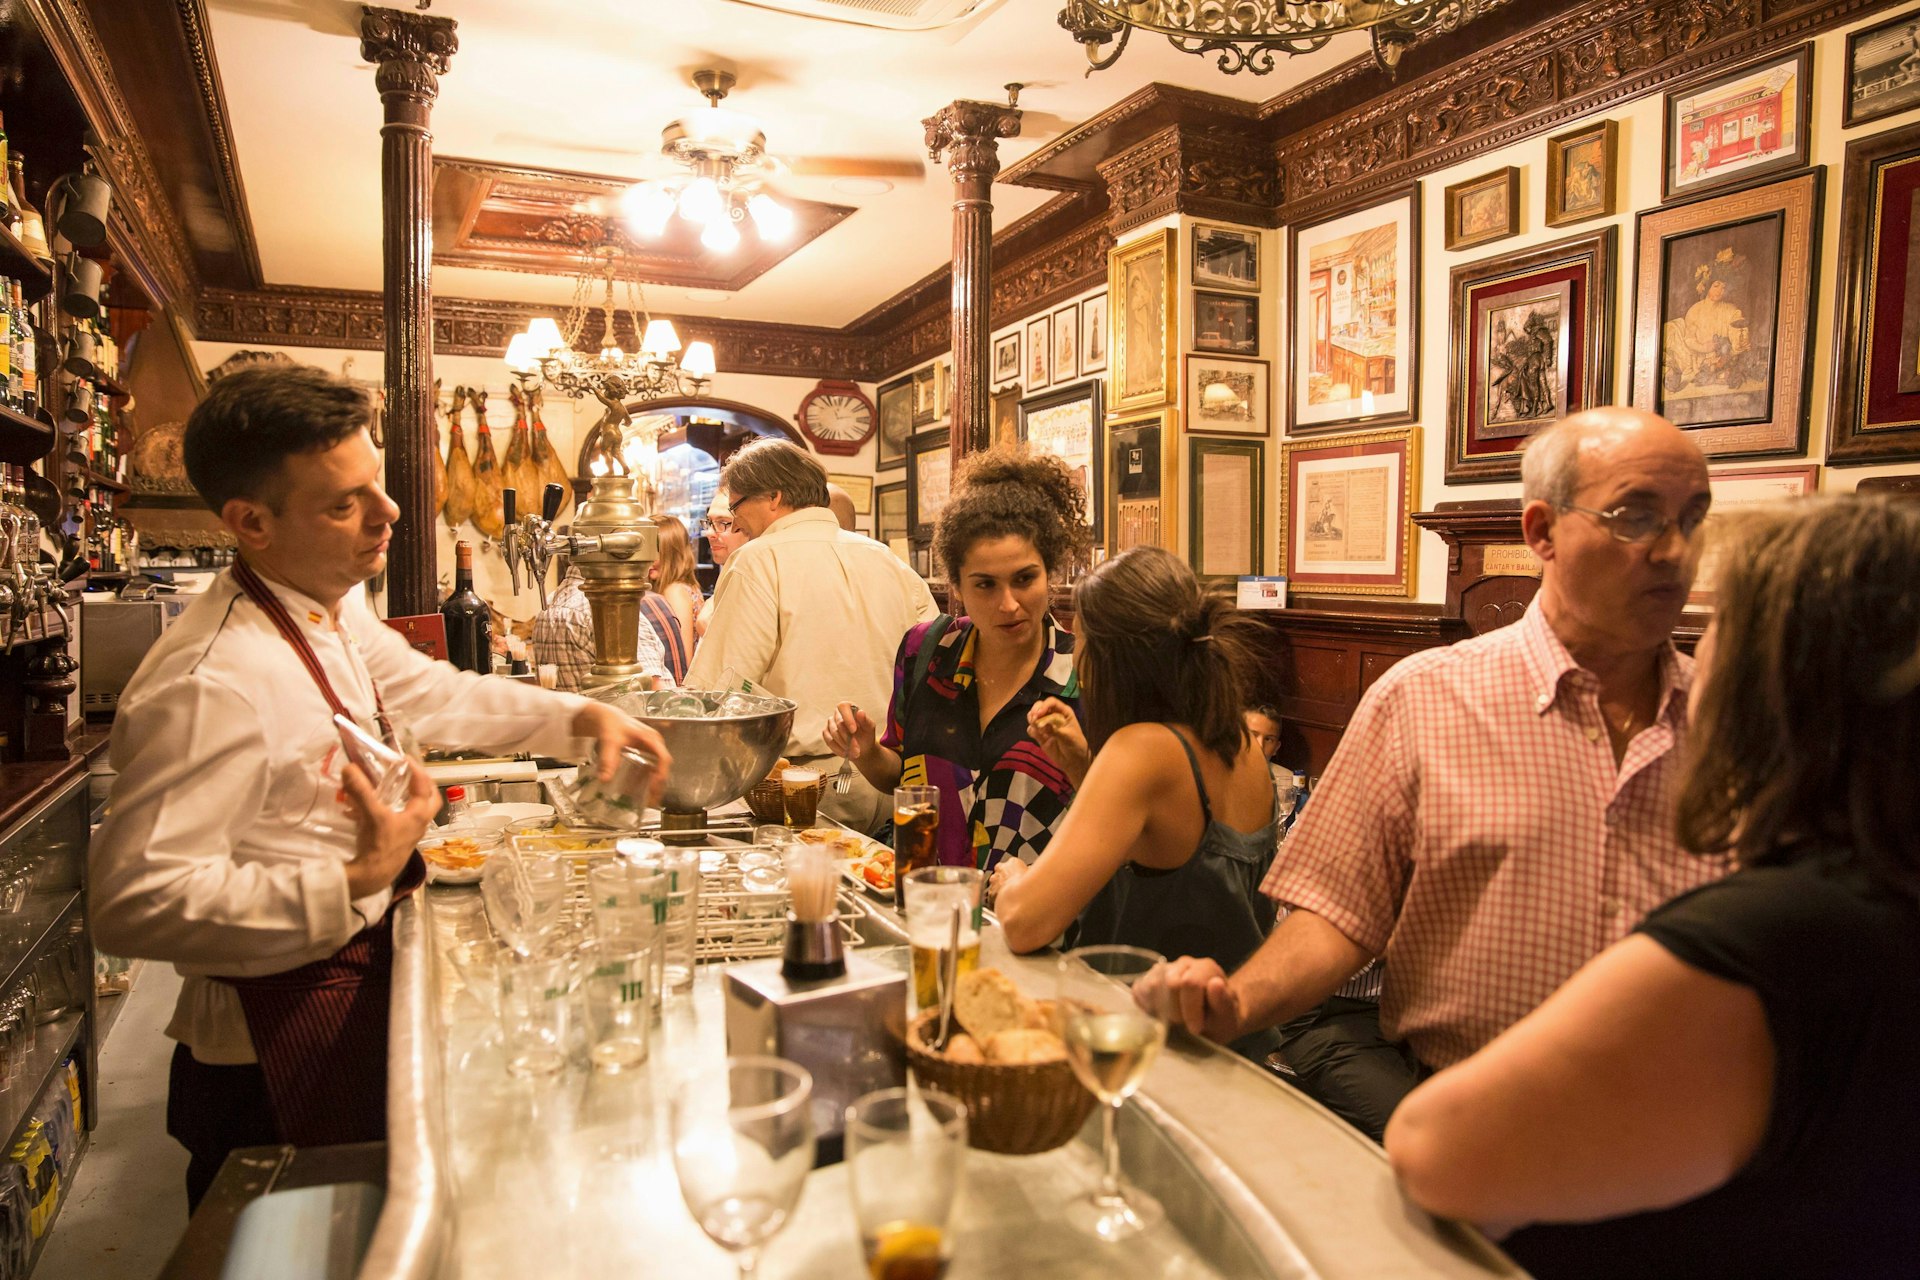 Guests chatting at the bar in 'Casa Alberto' tapas bar in Madrid, Spain